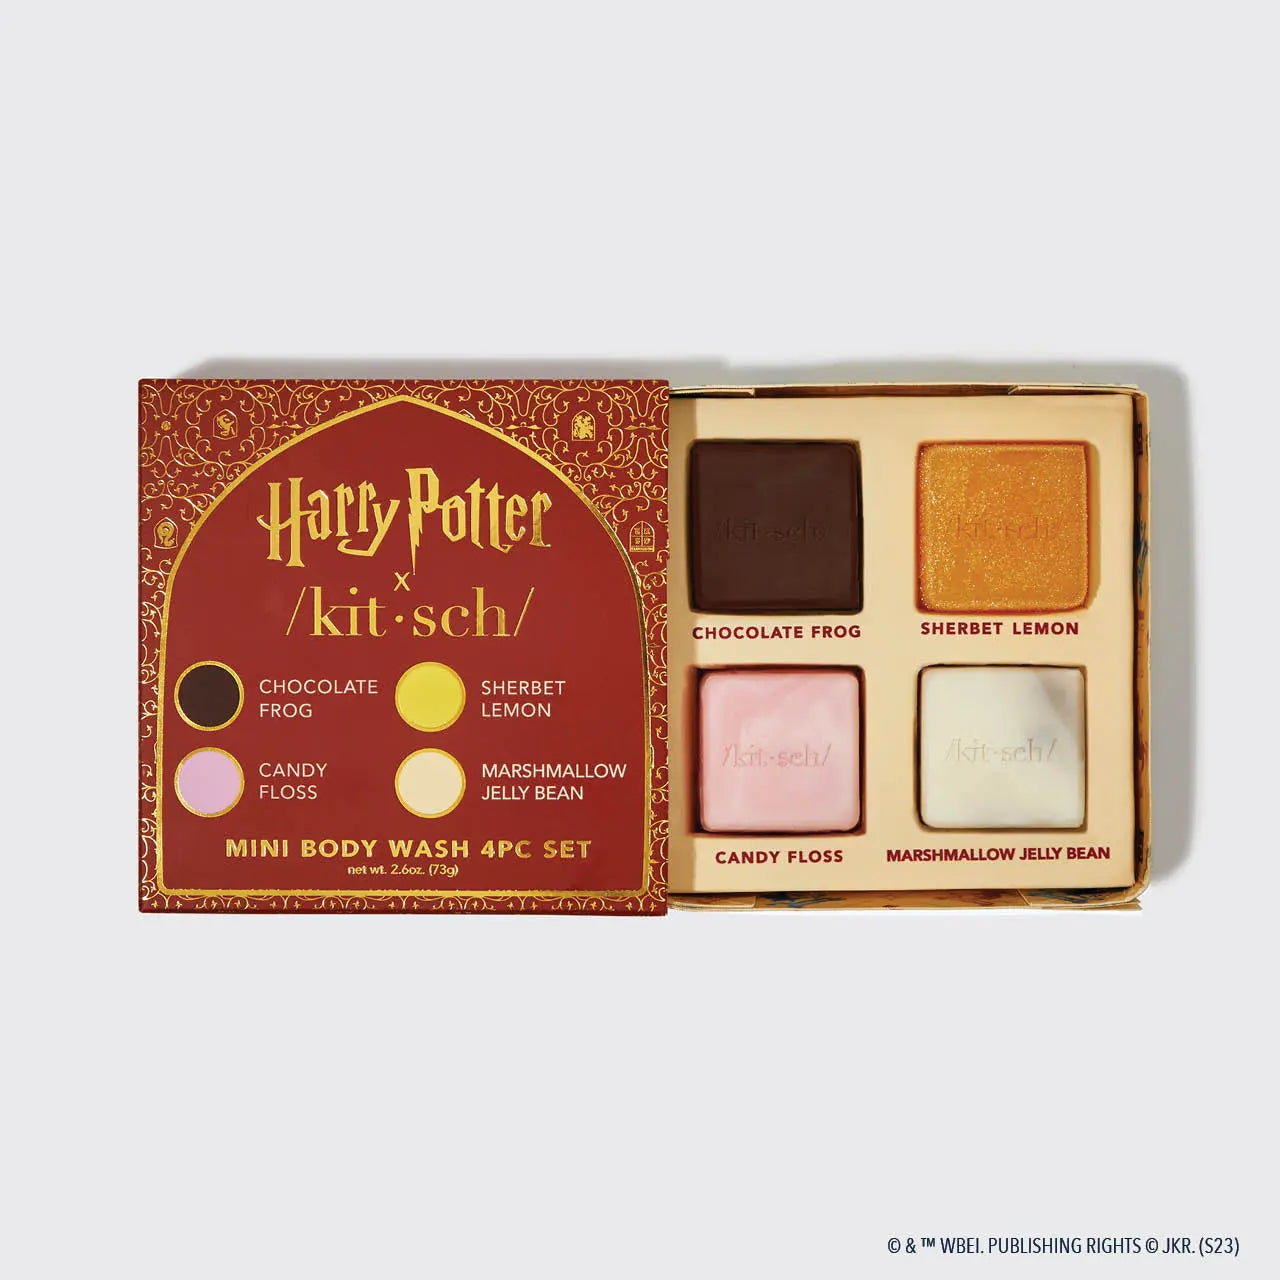 Kitsch - Harry Potter Body Wash 4pc Sampler Set